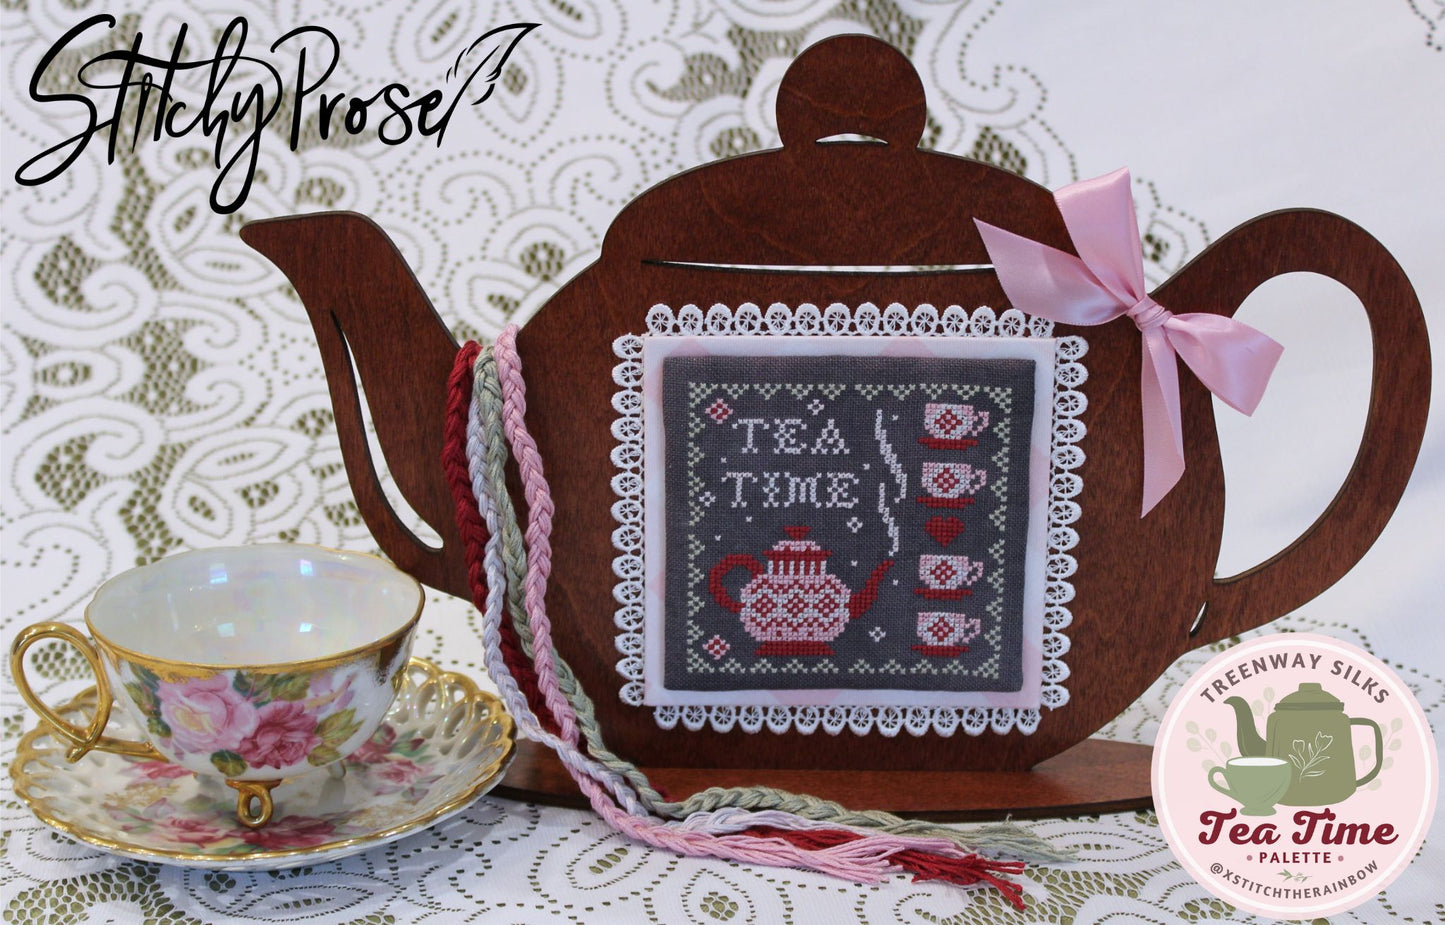 Tea Time by Stitchy Prose